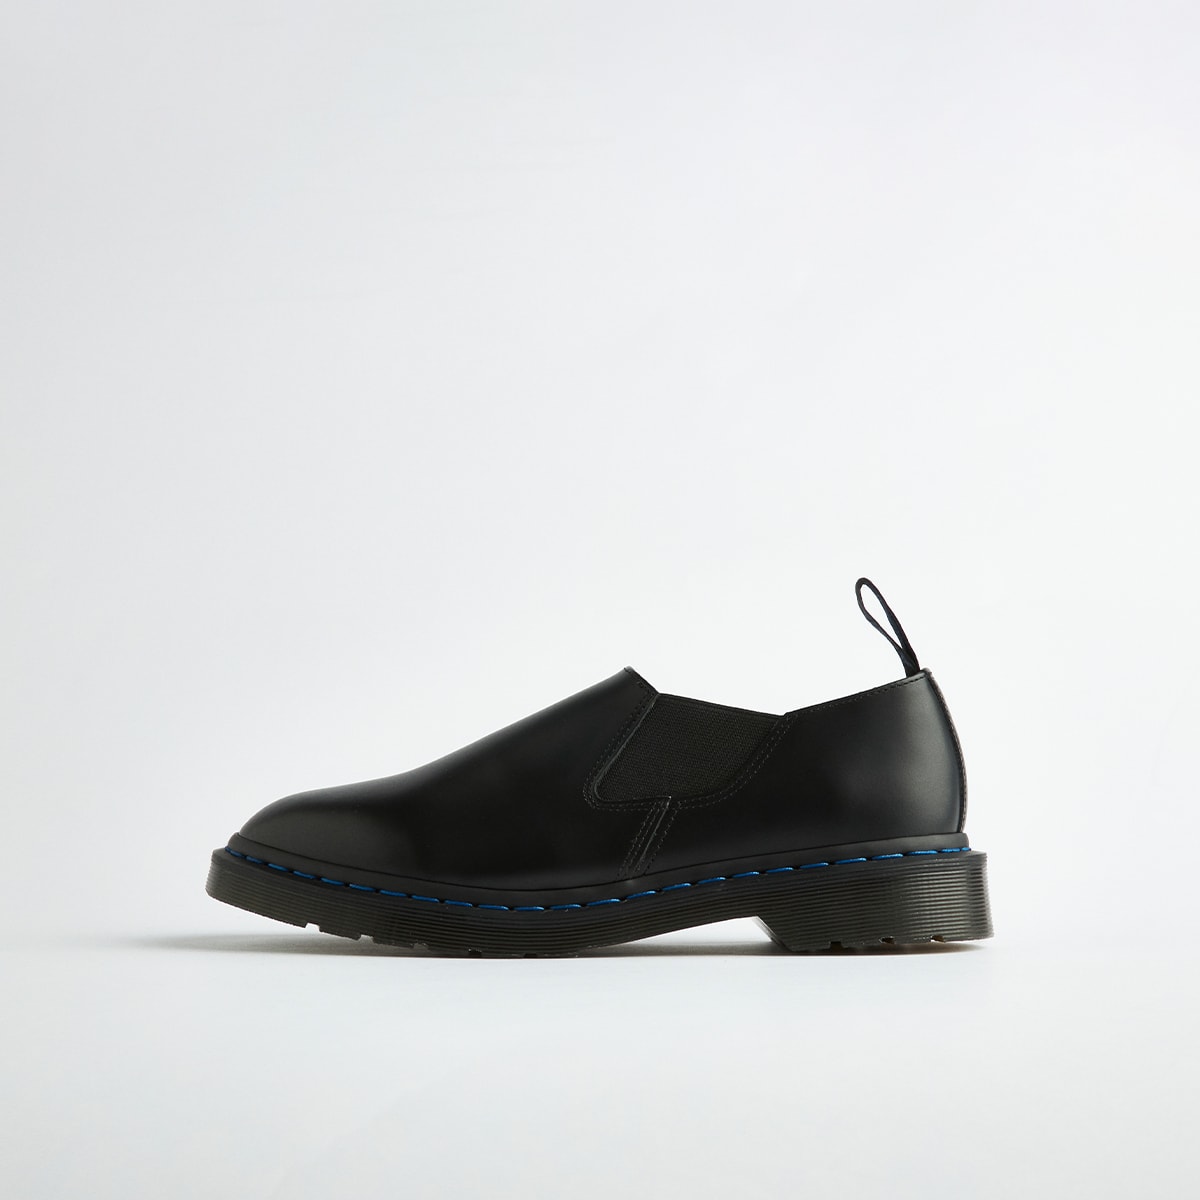 Dr. Martens' Chelsea Boots, Louis Slip-On Receive Subtle Nanamica Makeover